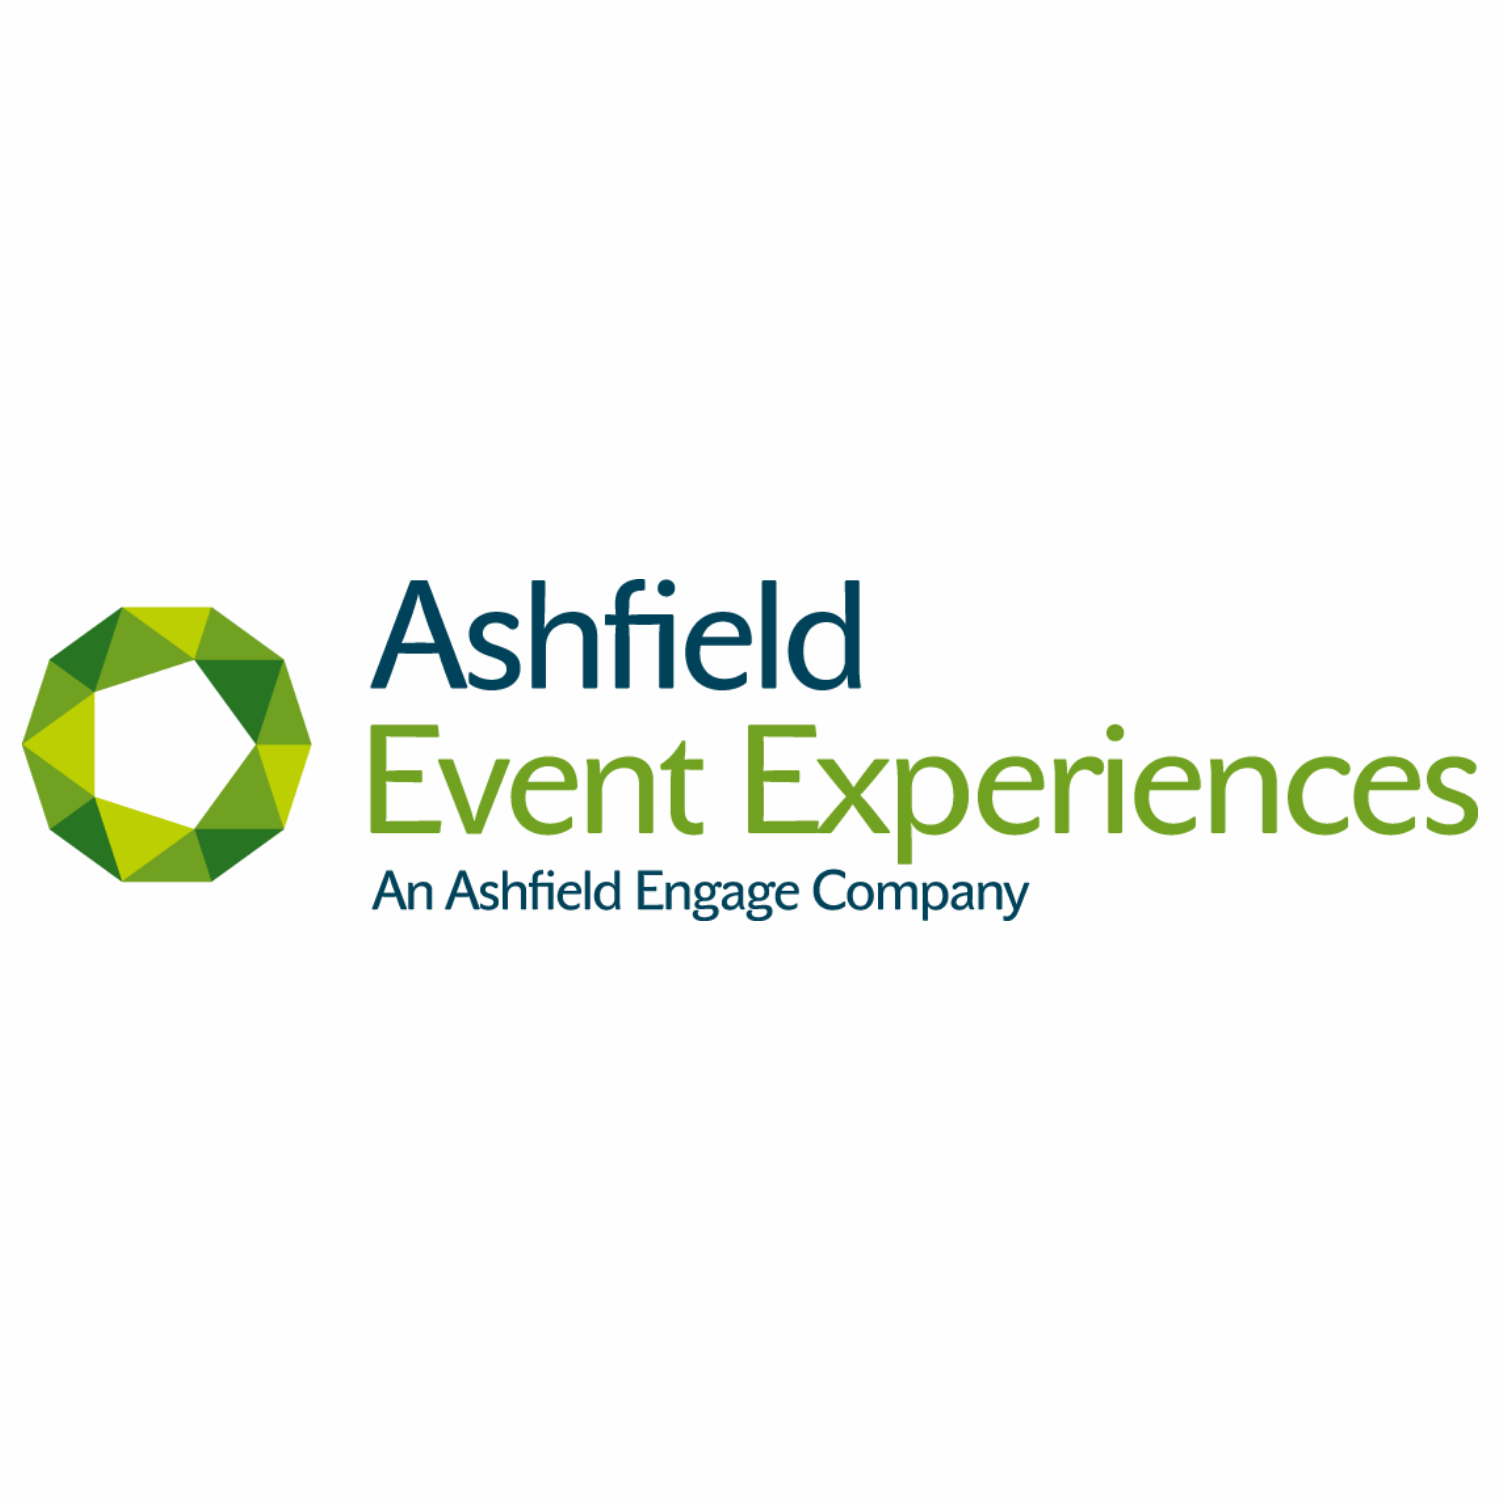 Ashfield Event Experiences